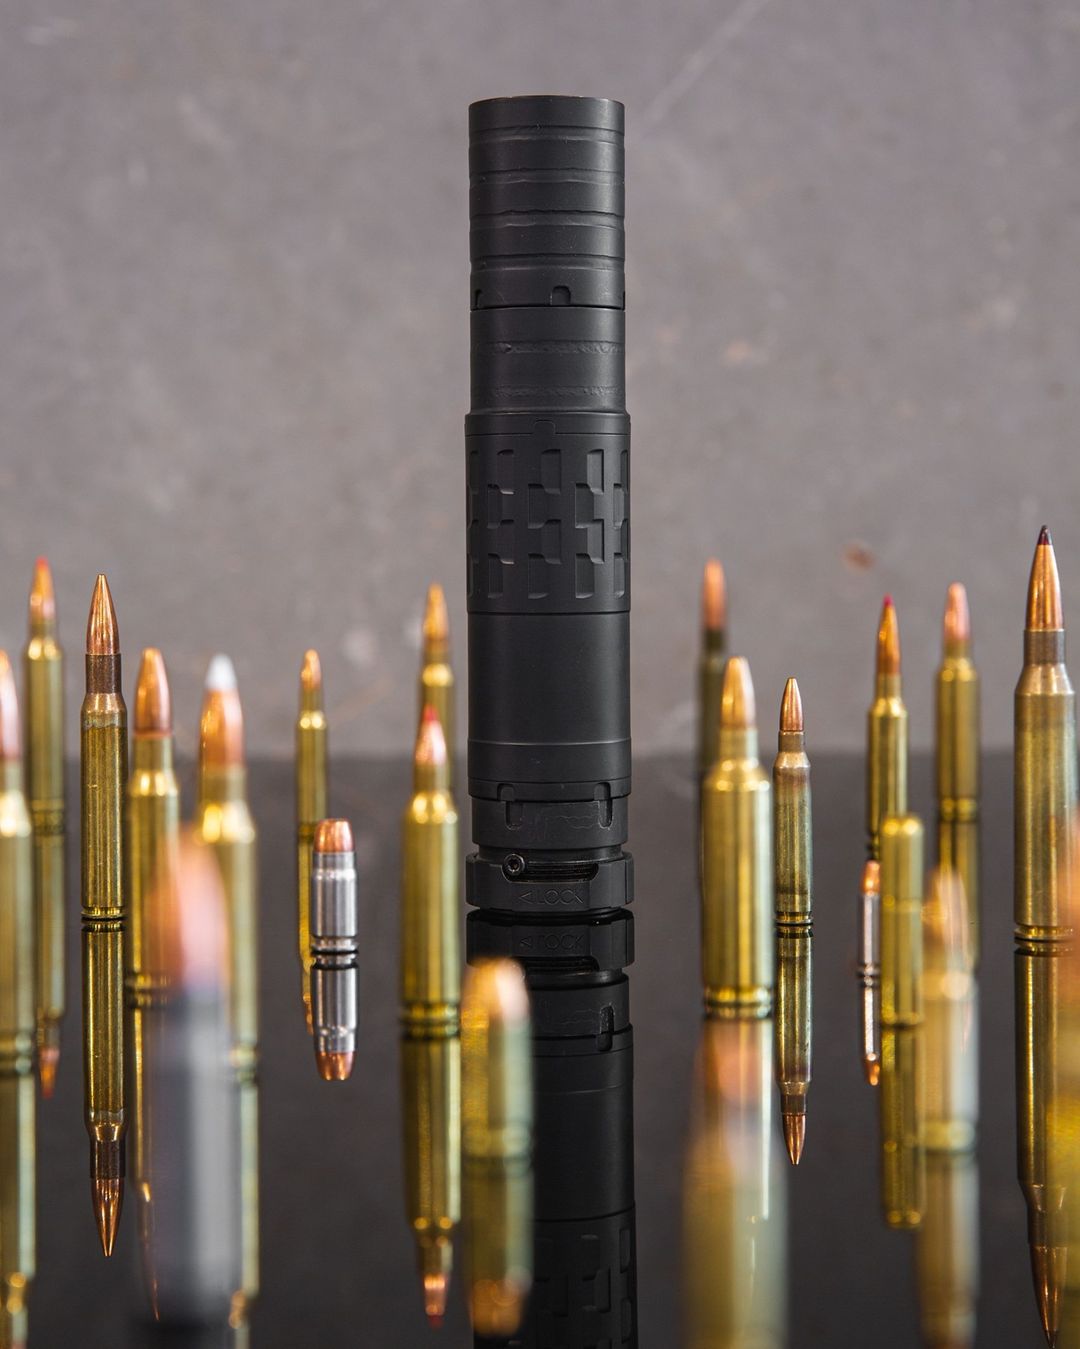 SilencerCo Omega 36M multi-caliber suppressor with various cartridges